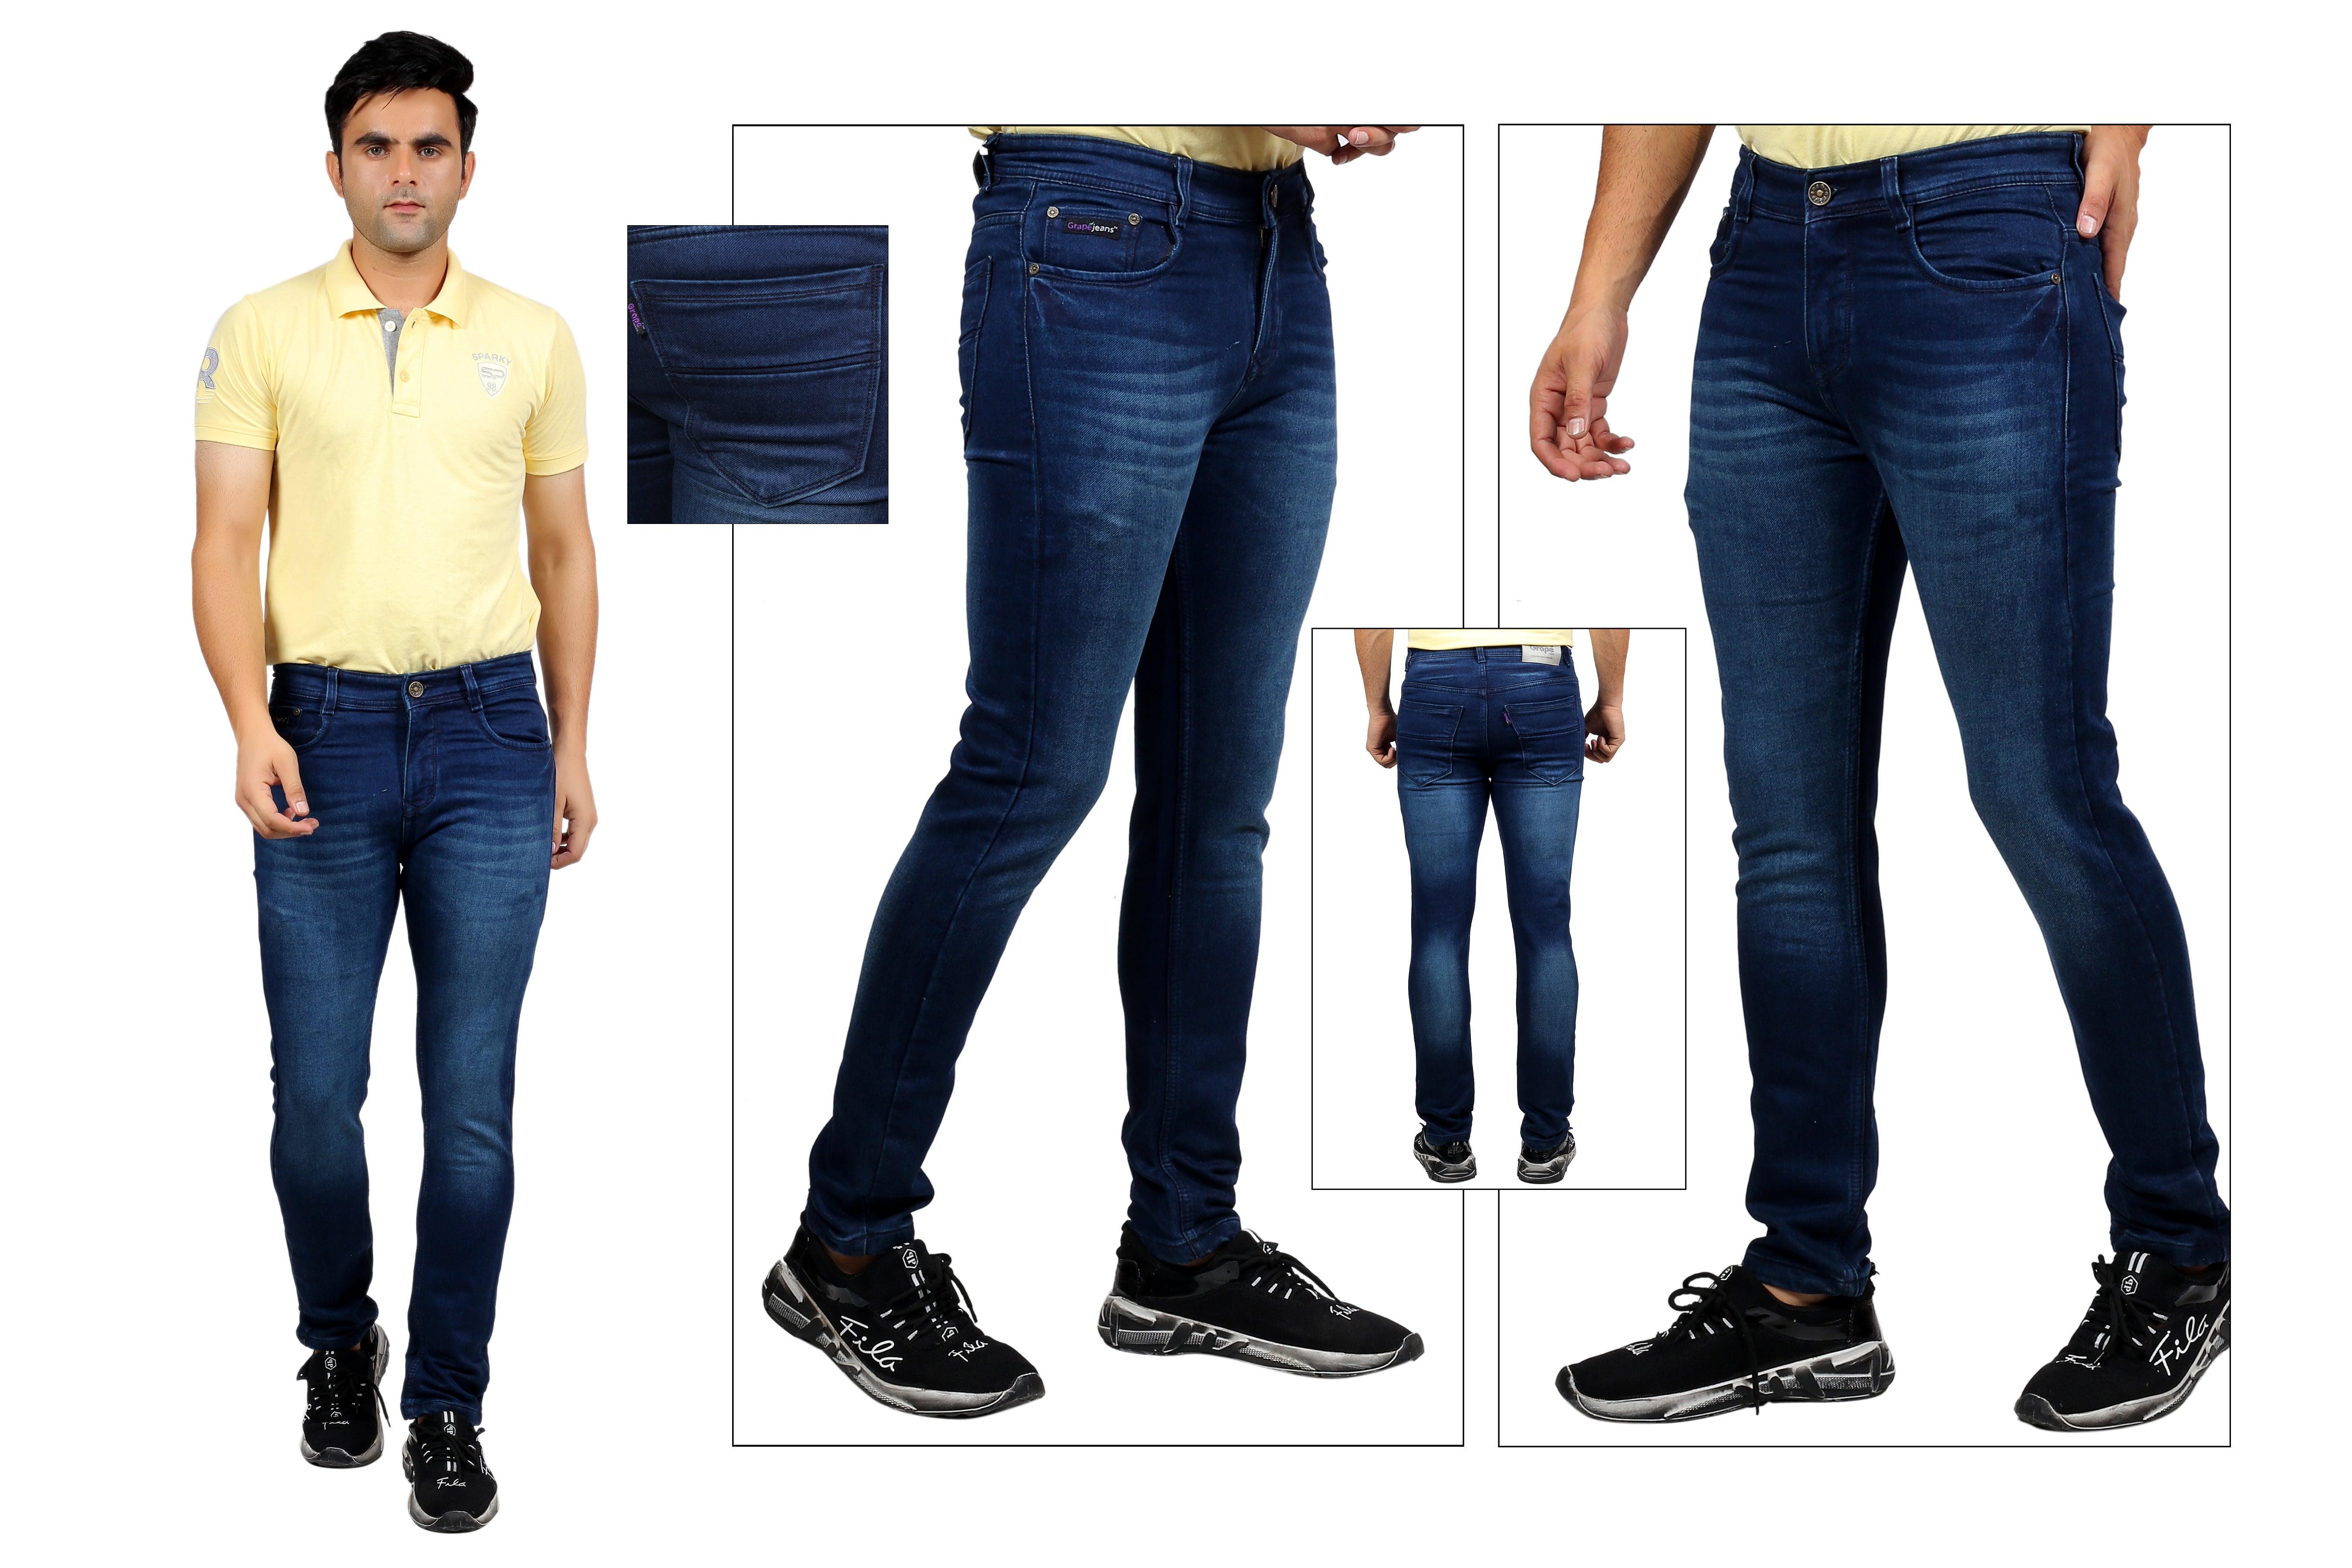 Detec™ Grapejeans Slim Fit Men's Denim Jean (Blue Jeans)